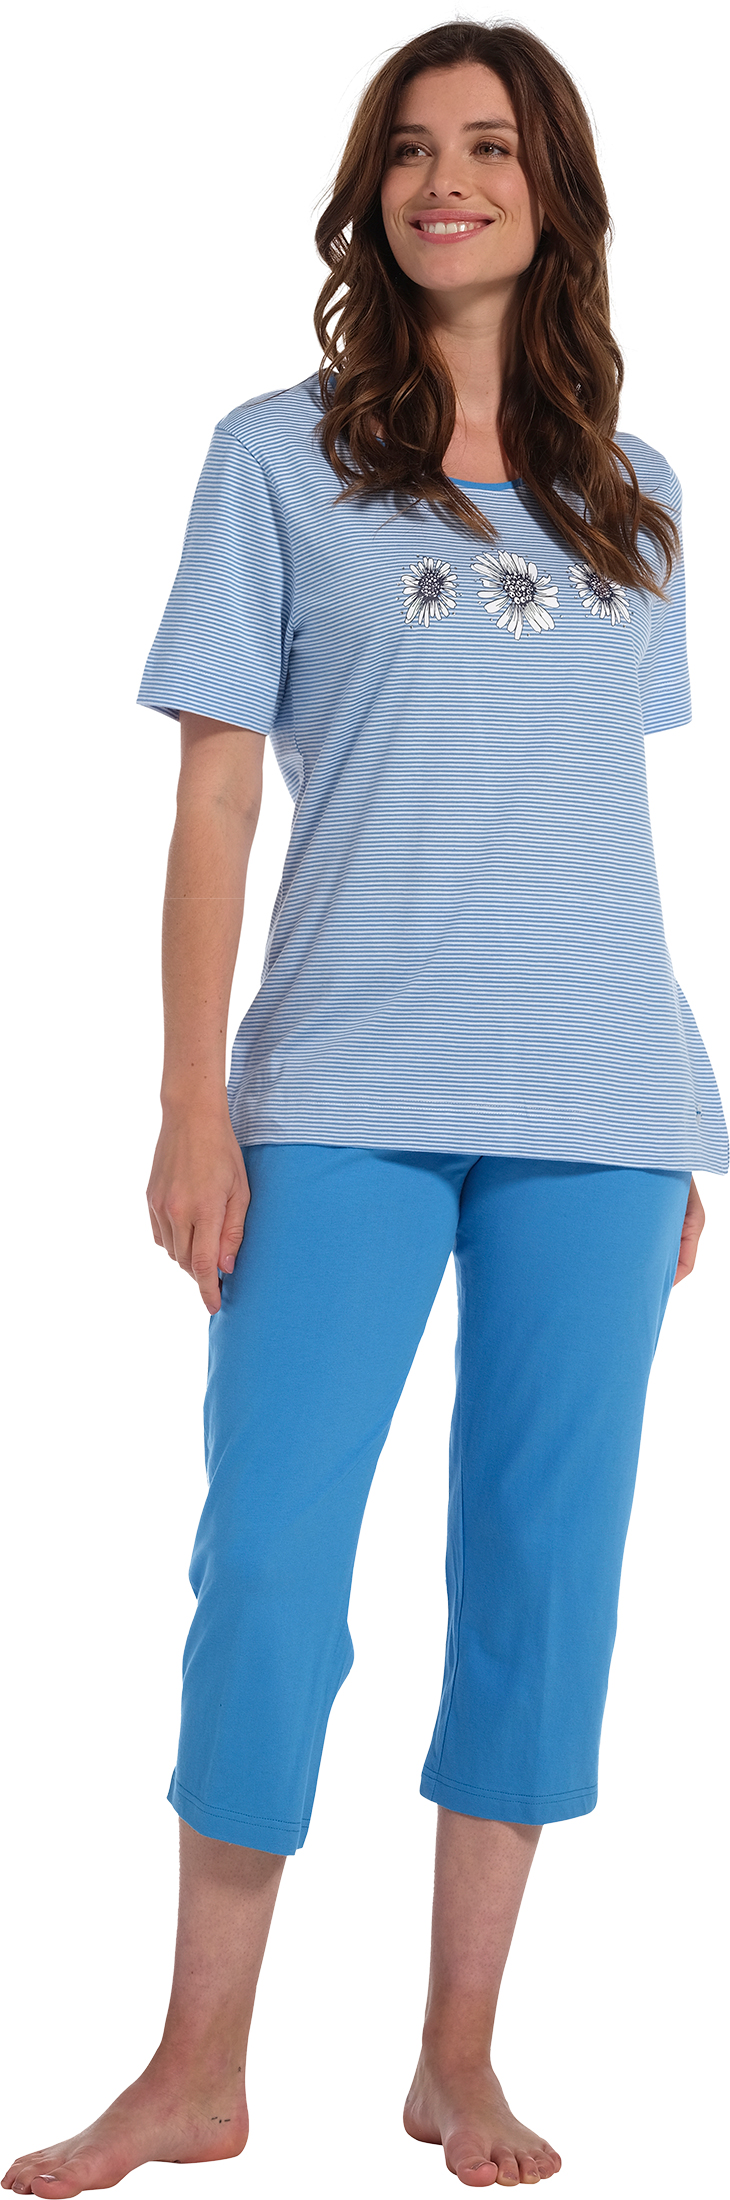 Pastunette dames pyjama capri 20231-130-2 - Blauw - 36